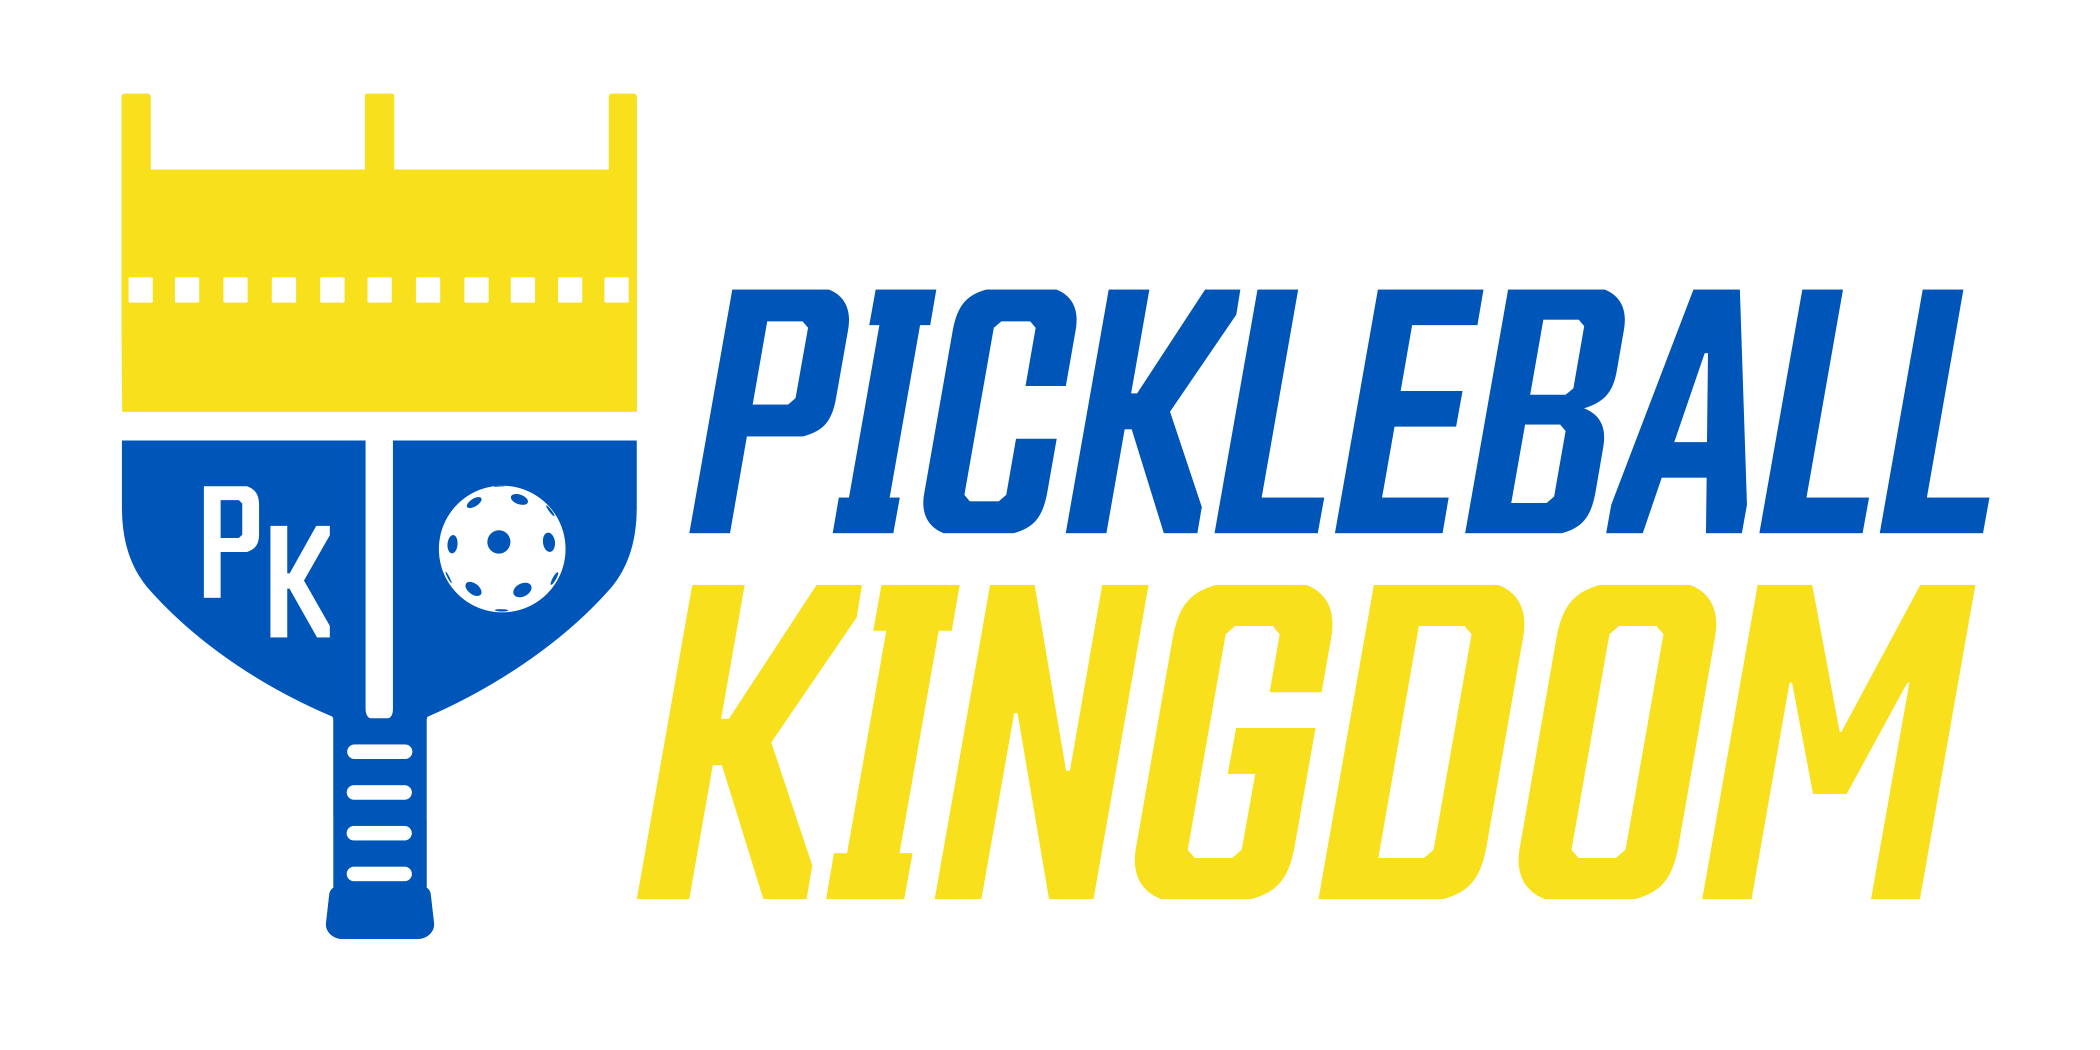 Pickleball Kingdom